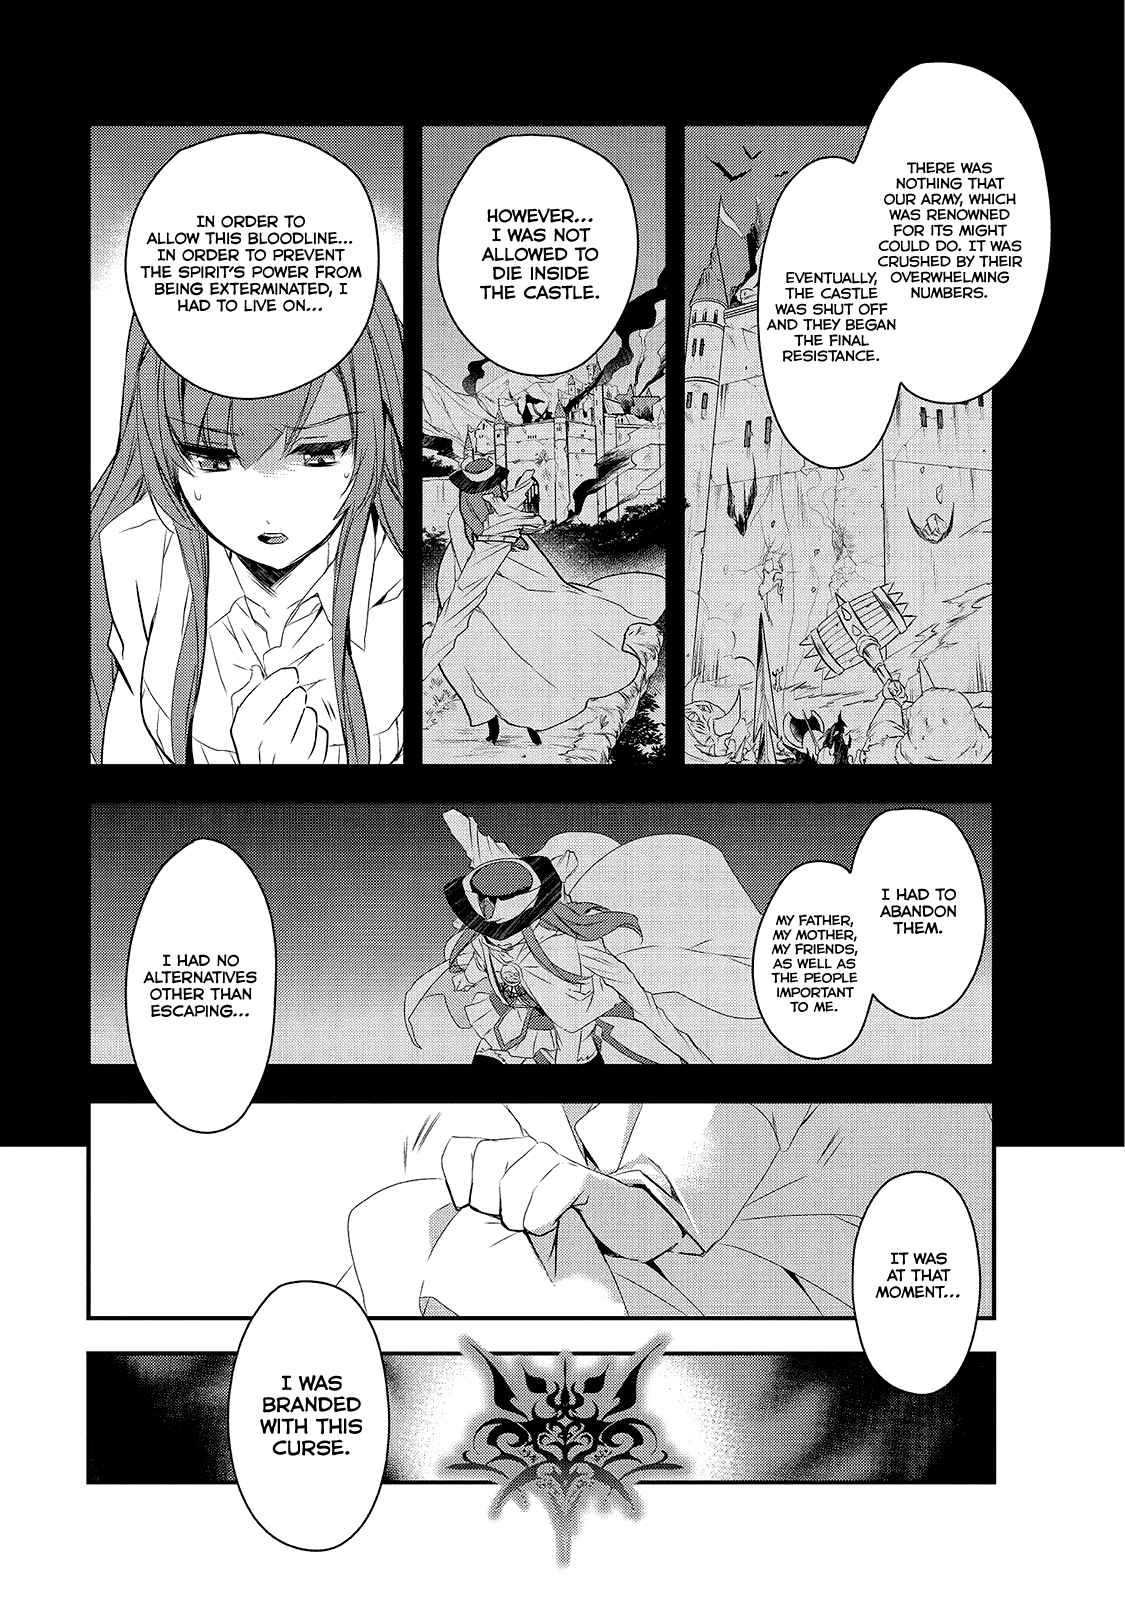 Isekai Mahou wa Okureteru! Vol. 4 Ch. 16 Demon General Rajas IV